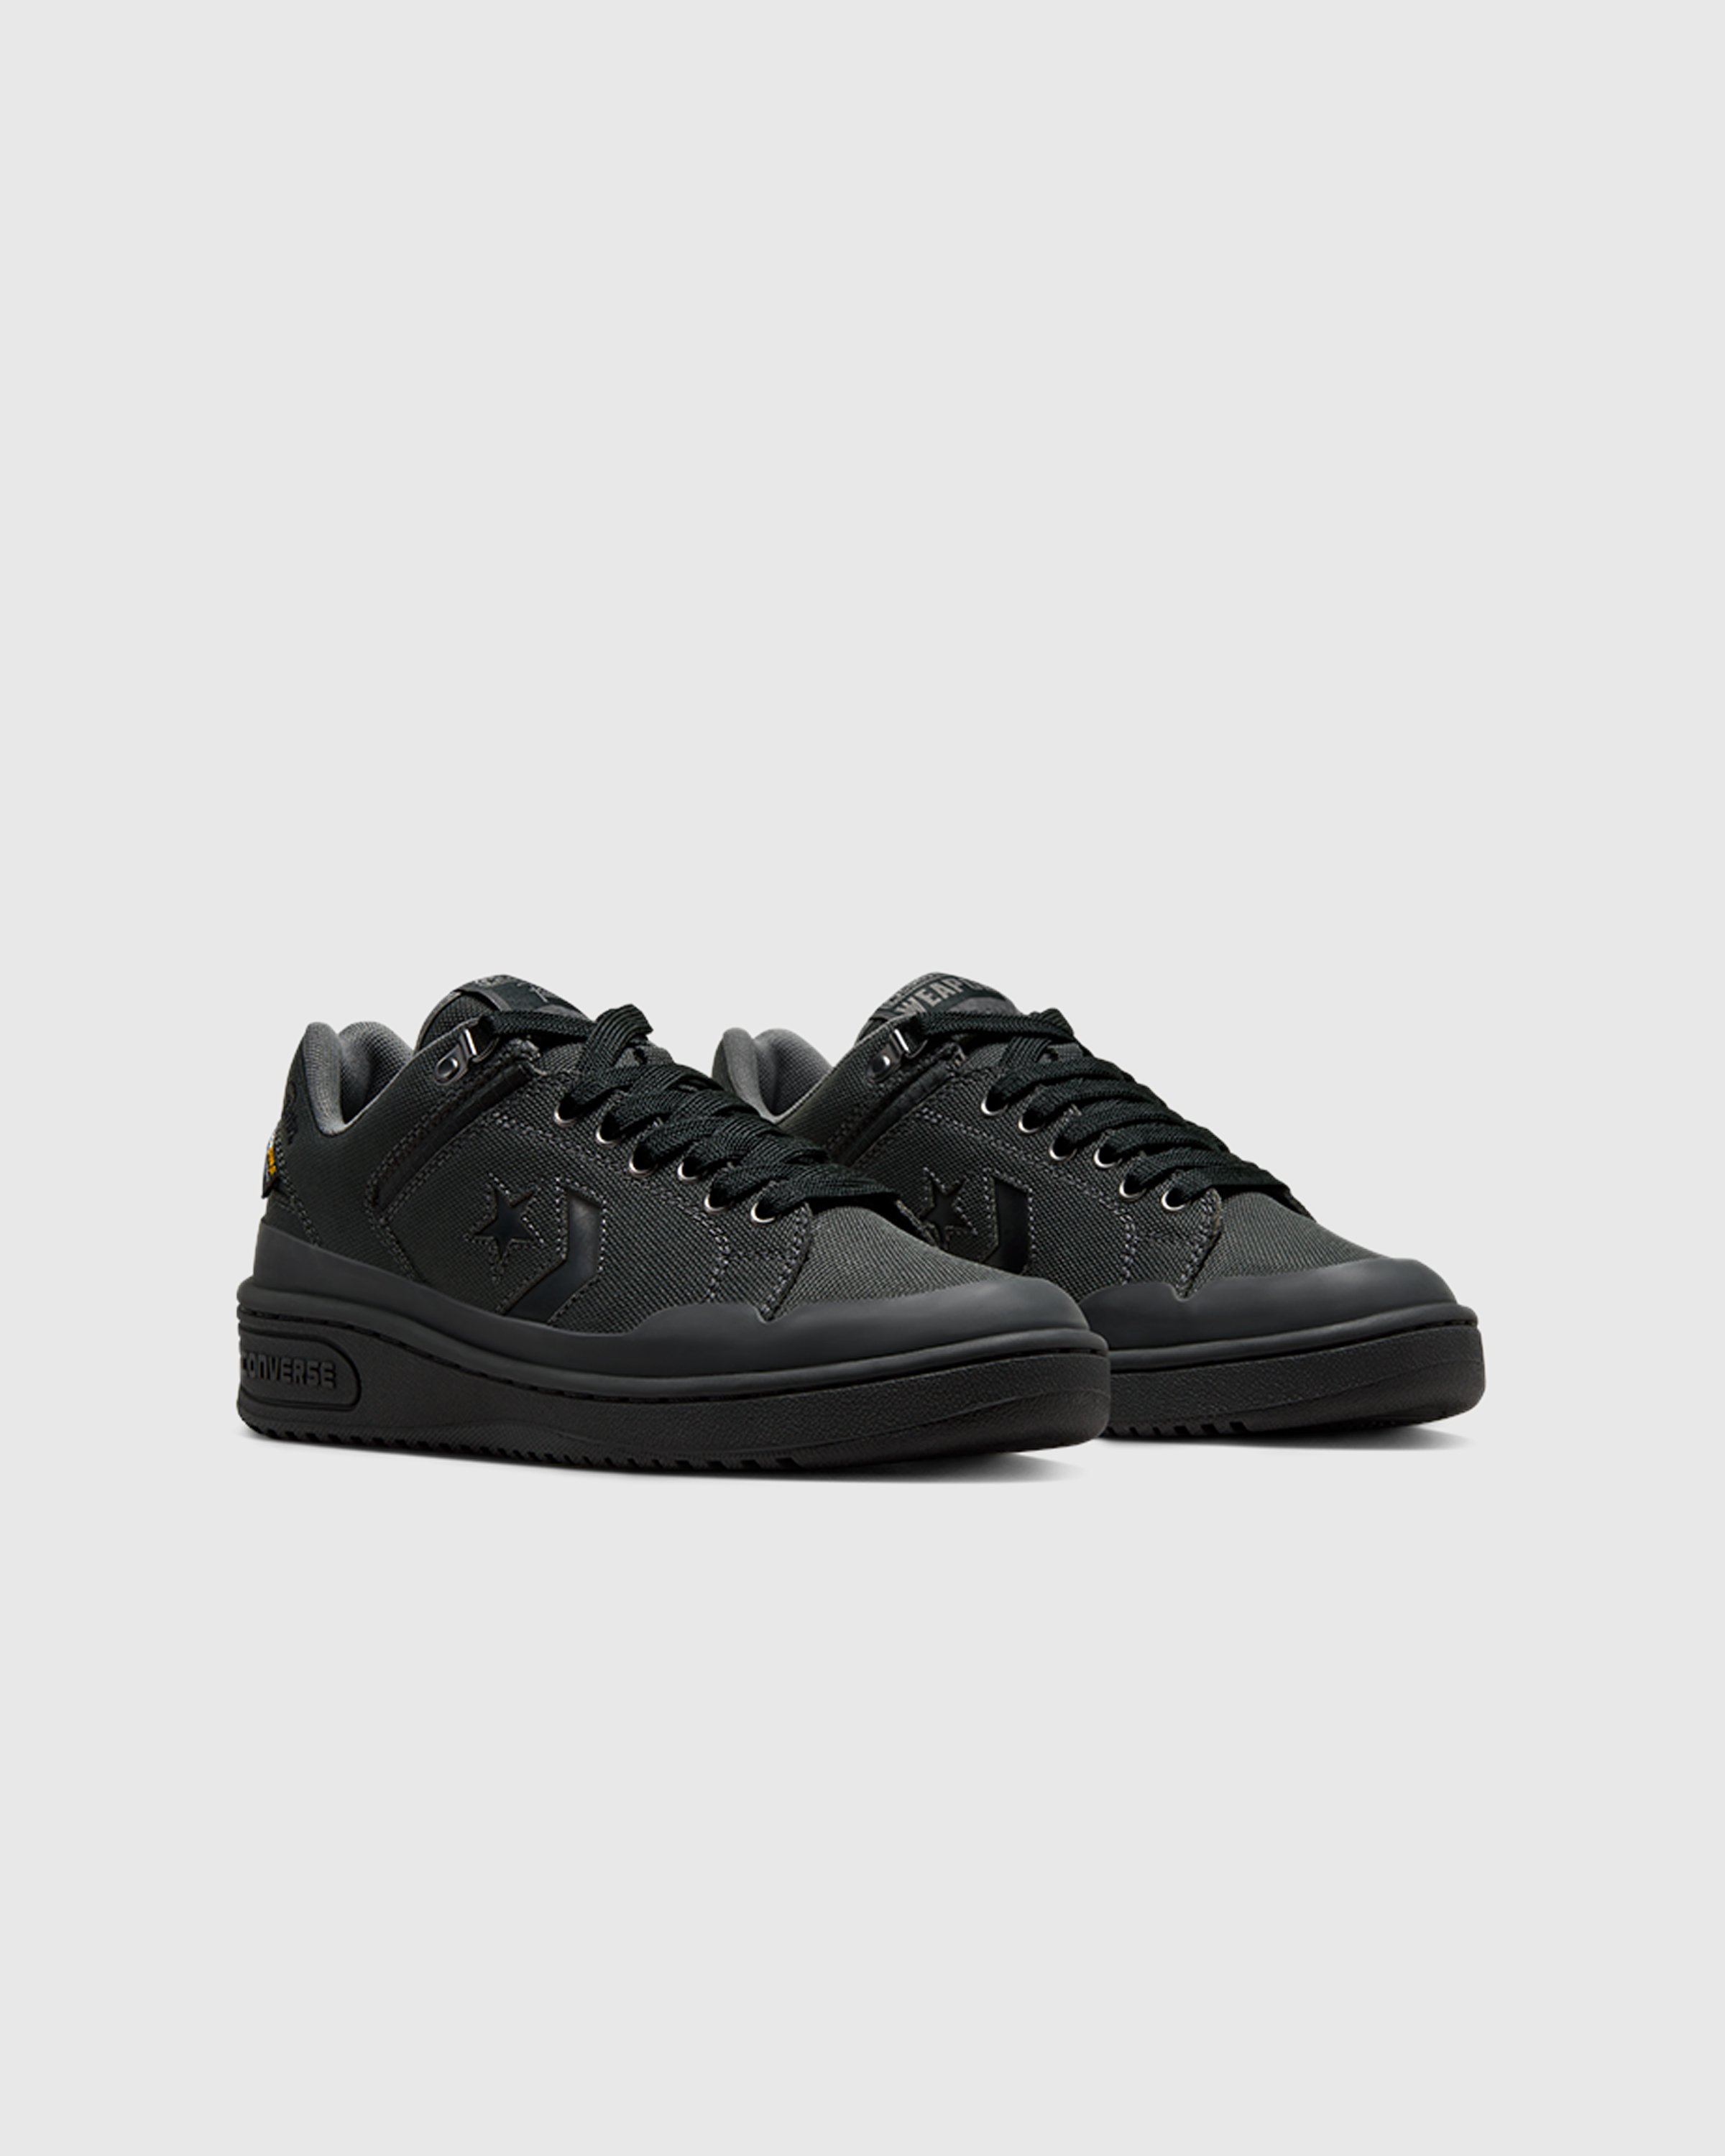 Converse x Patta - WEAPON OX BLACK/GRAY/MULTI - Footwear - Black - Image 3